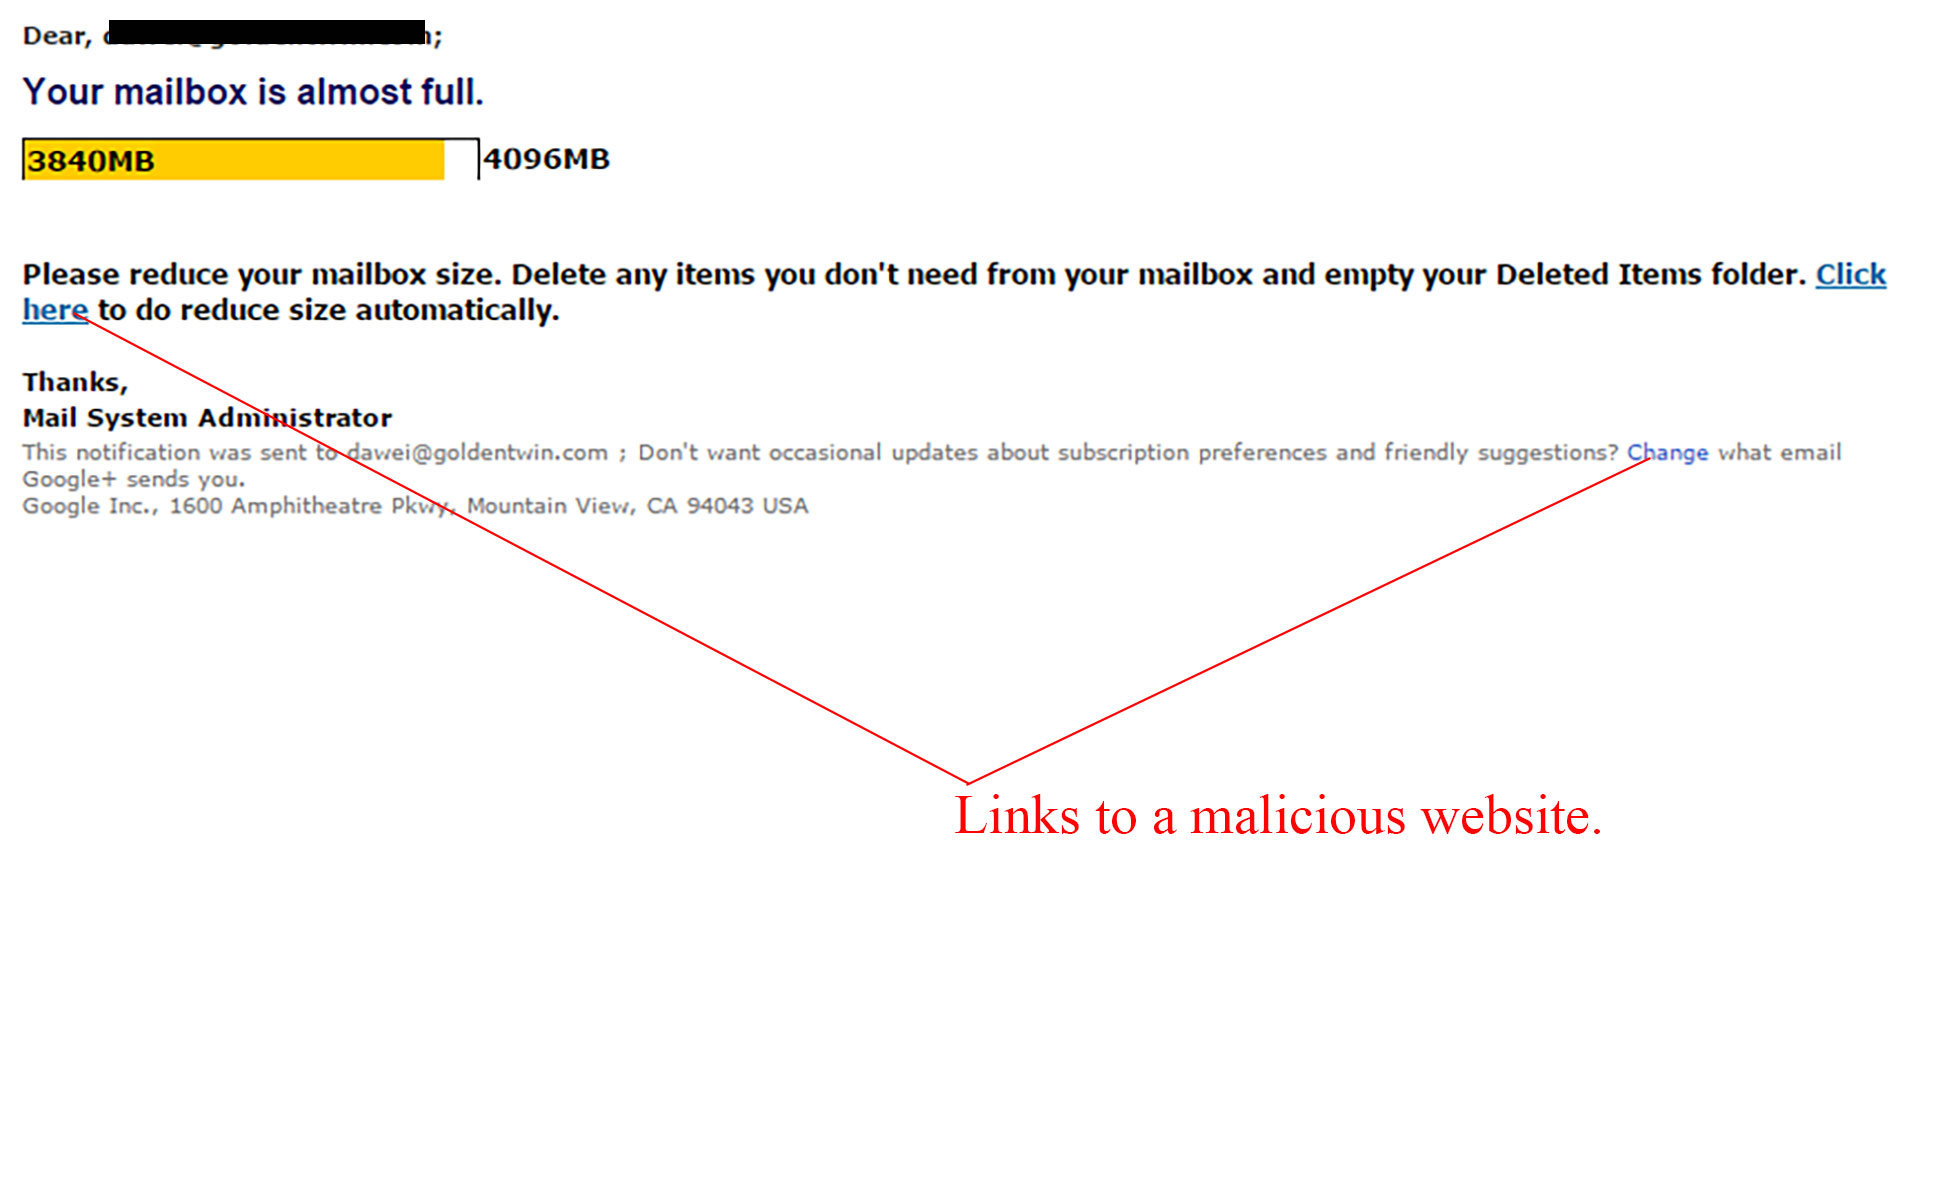 MailShark Fake Full Mailbox Update Email Scam